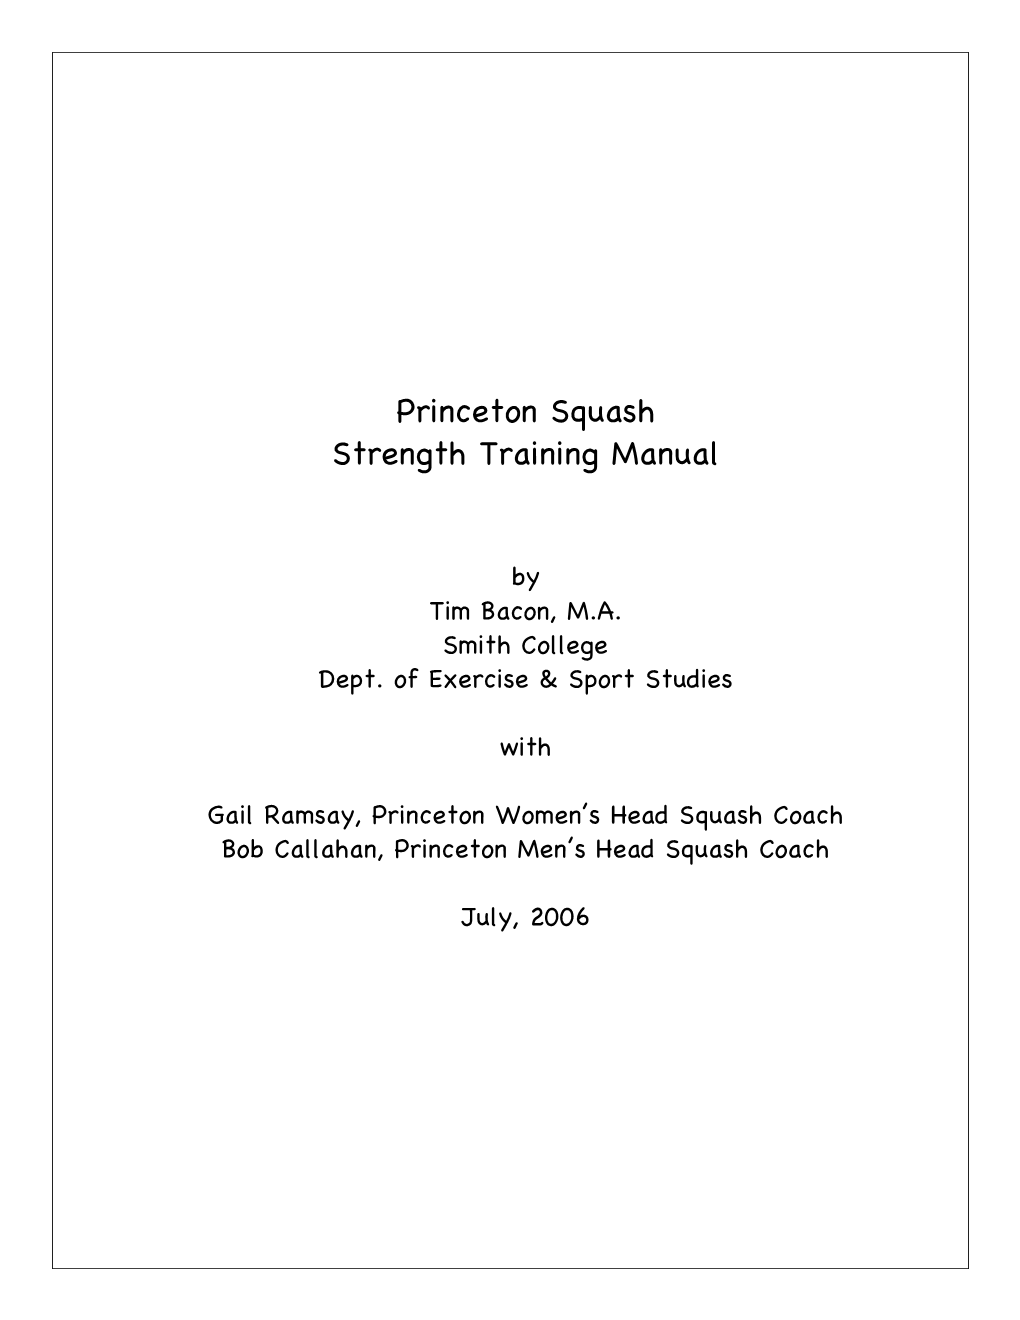 Princeton Squash Strength Training Manual